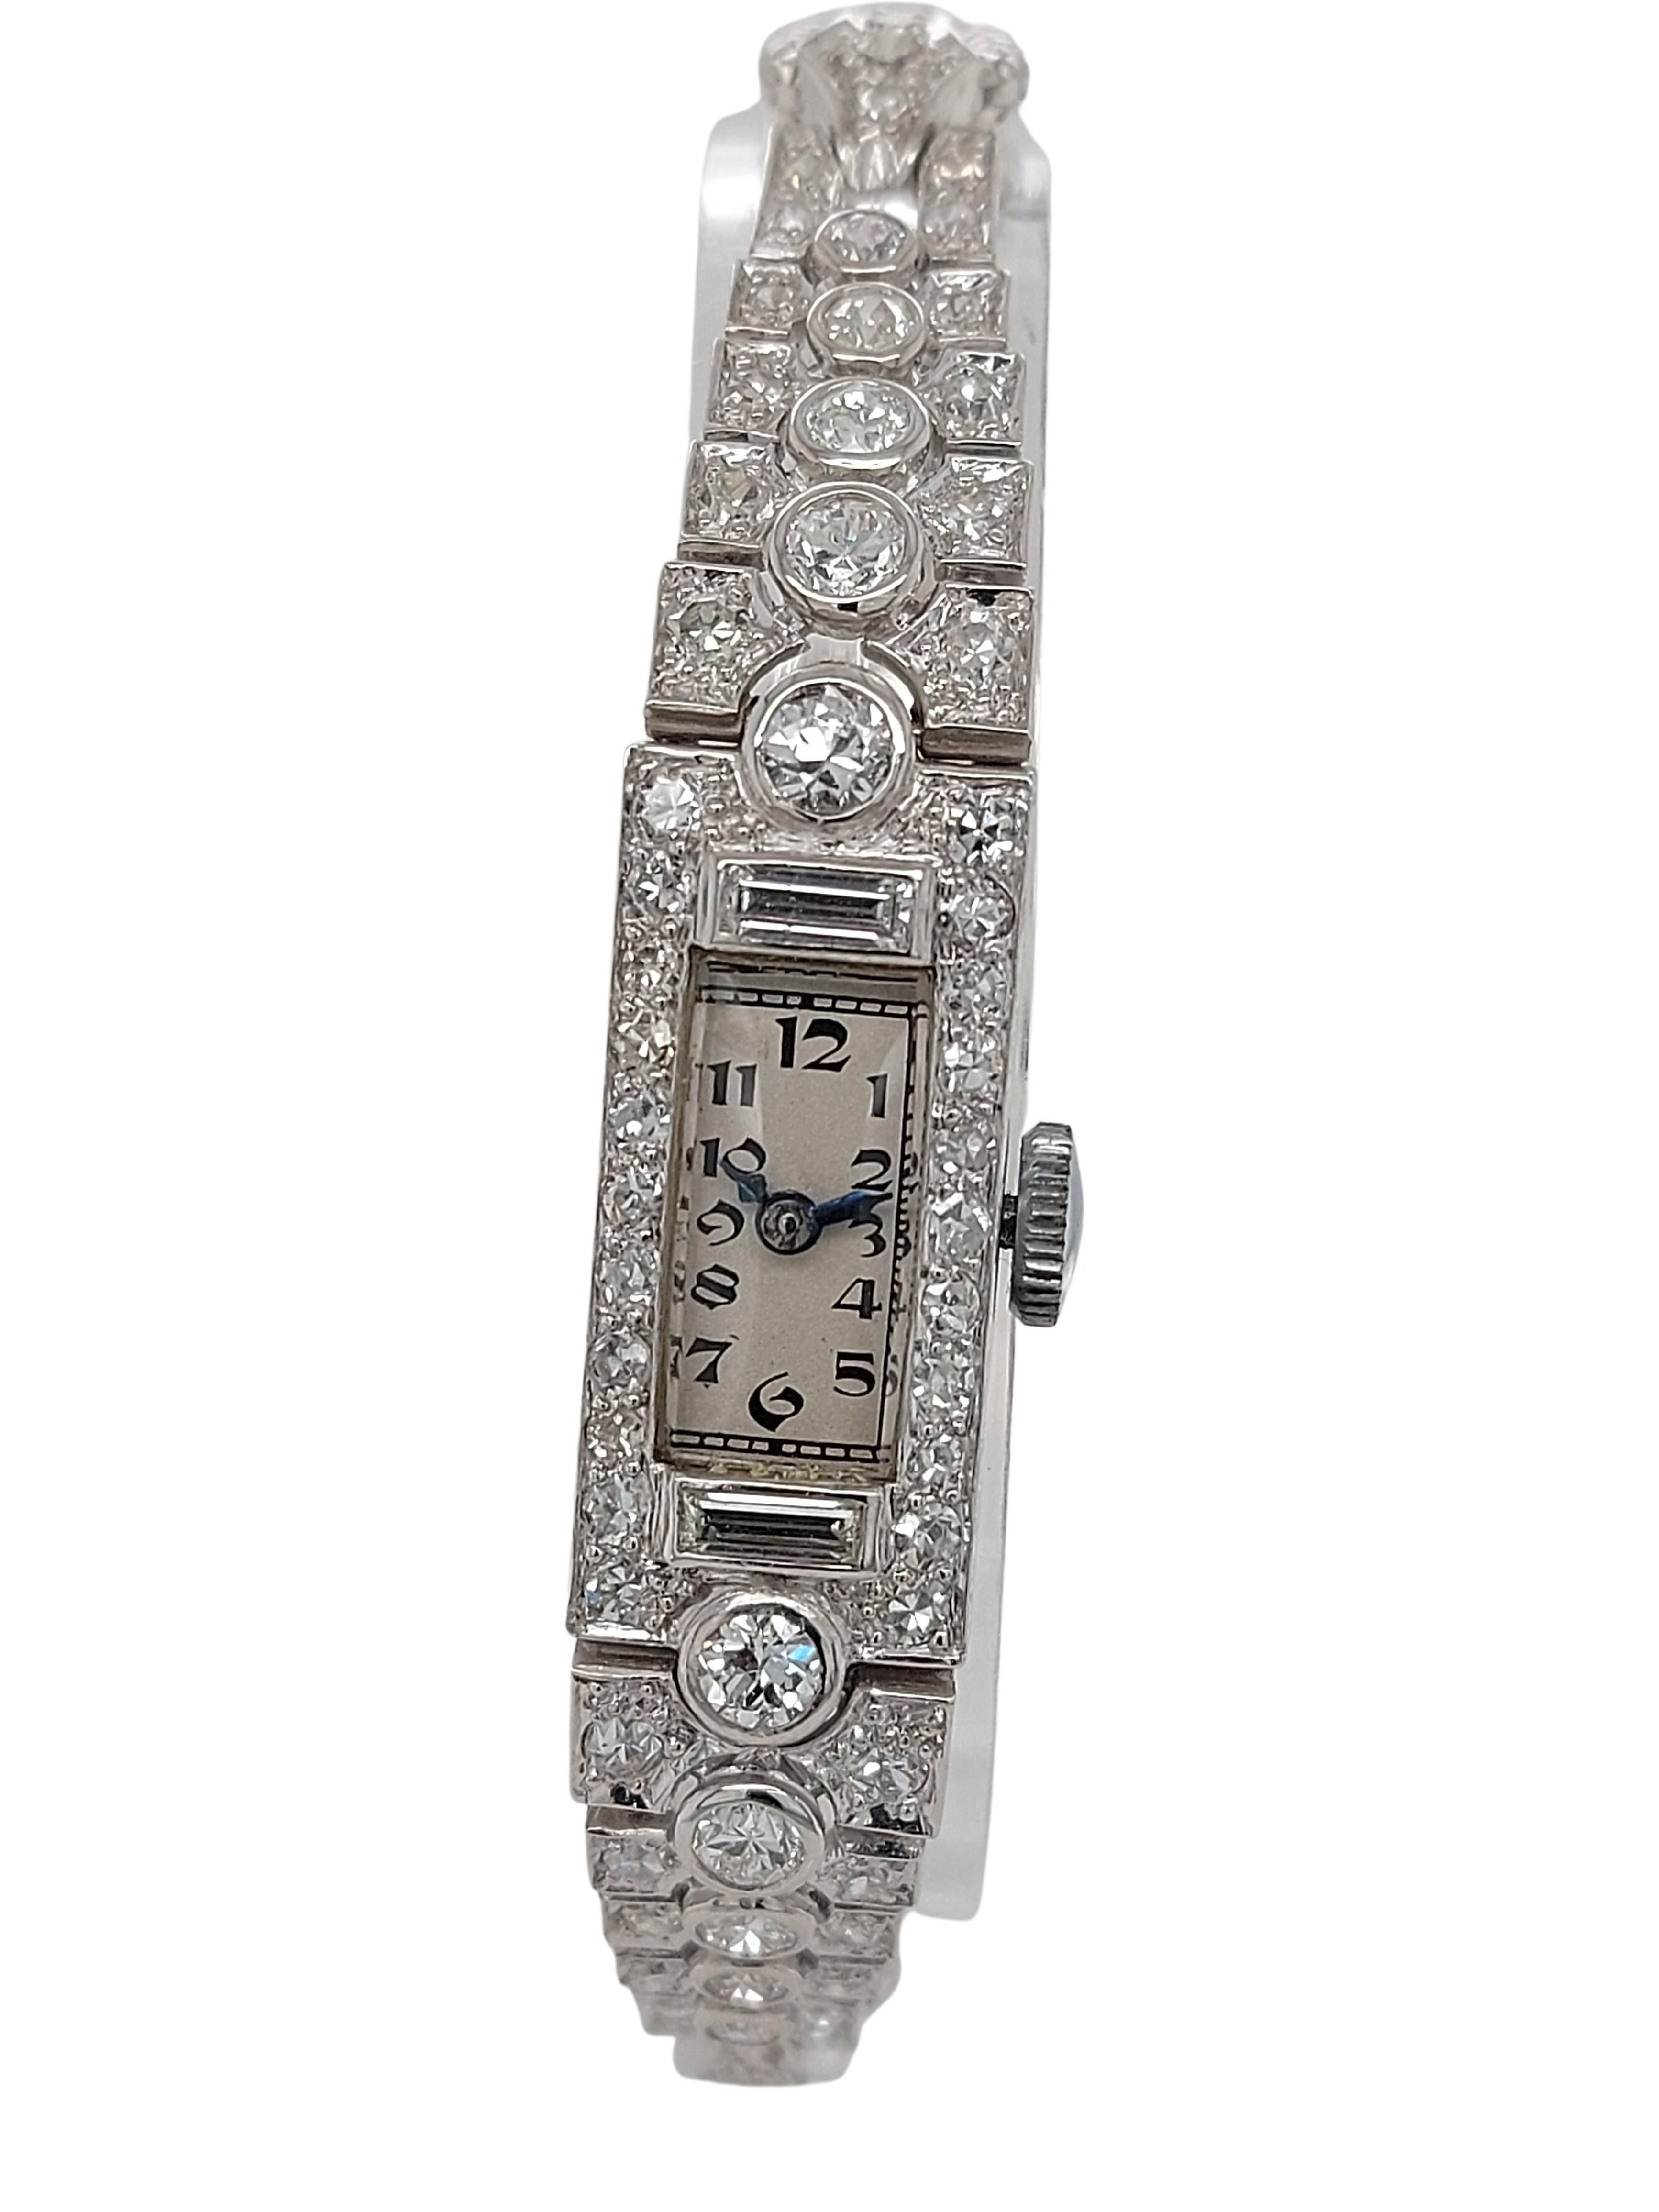 Platinum Lady Wristwatch with Old Cut or Baguette Cut Diamonds For Sale 4